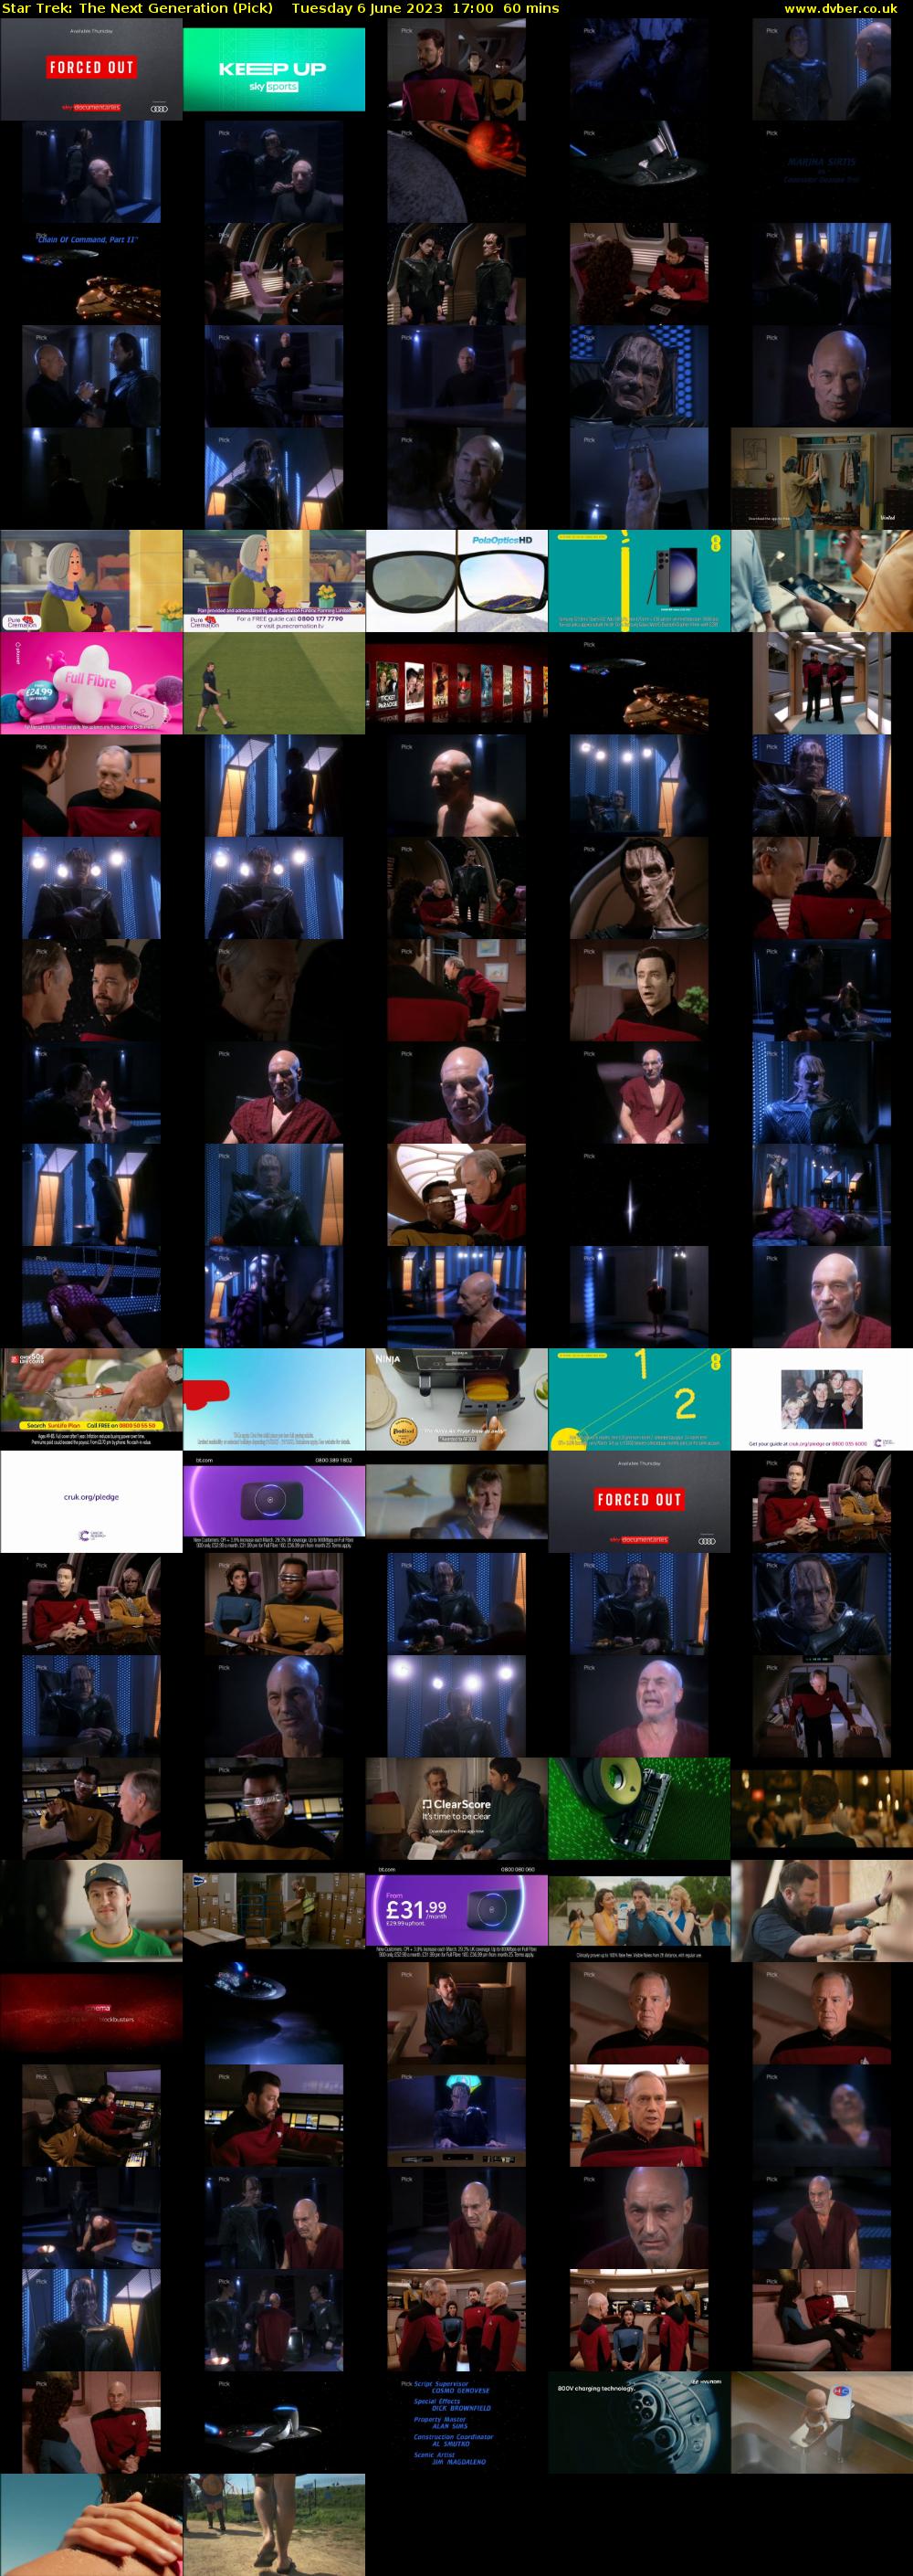 Star Trek: The Next Generation (Pick) Tuesday 6 June 2023 17:00 - 18:00